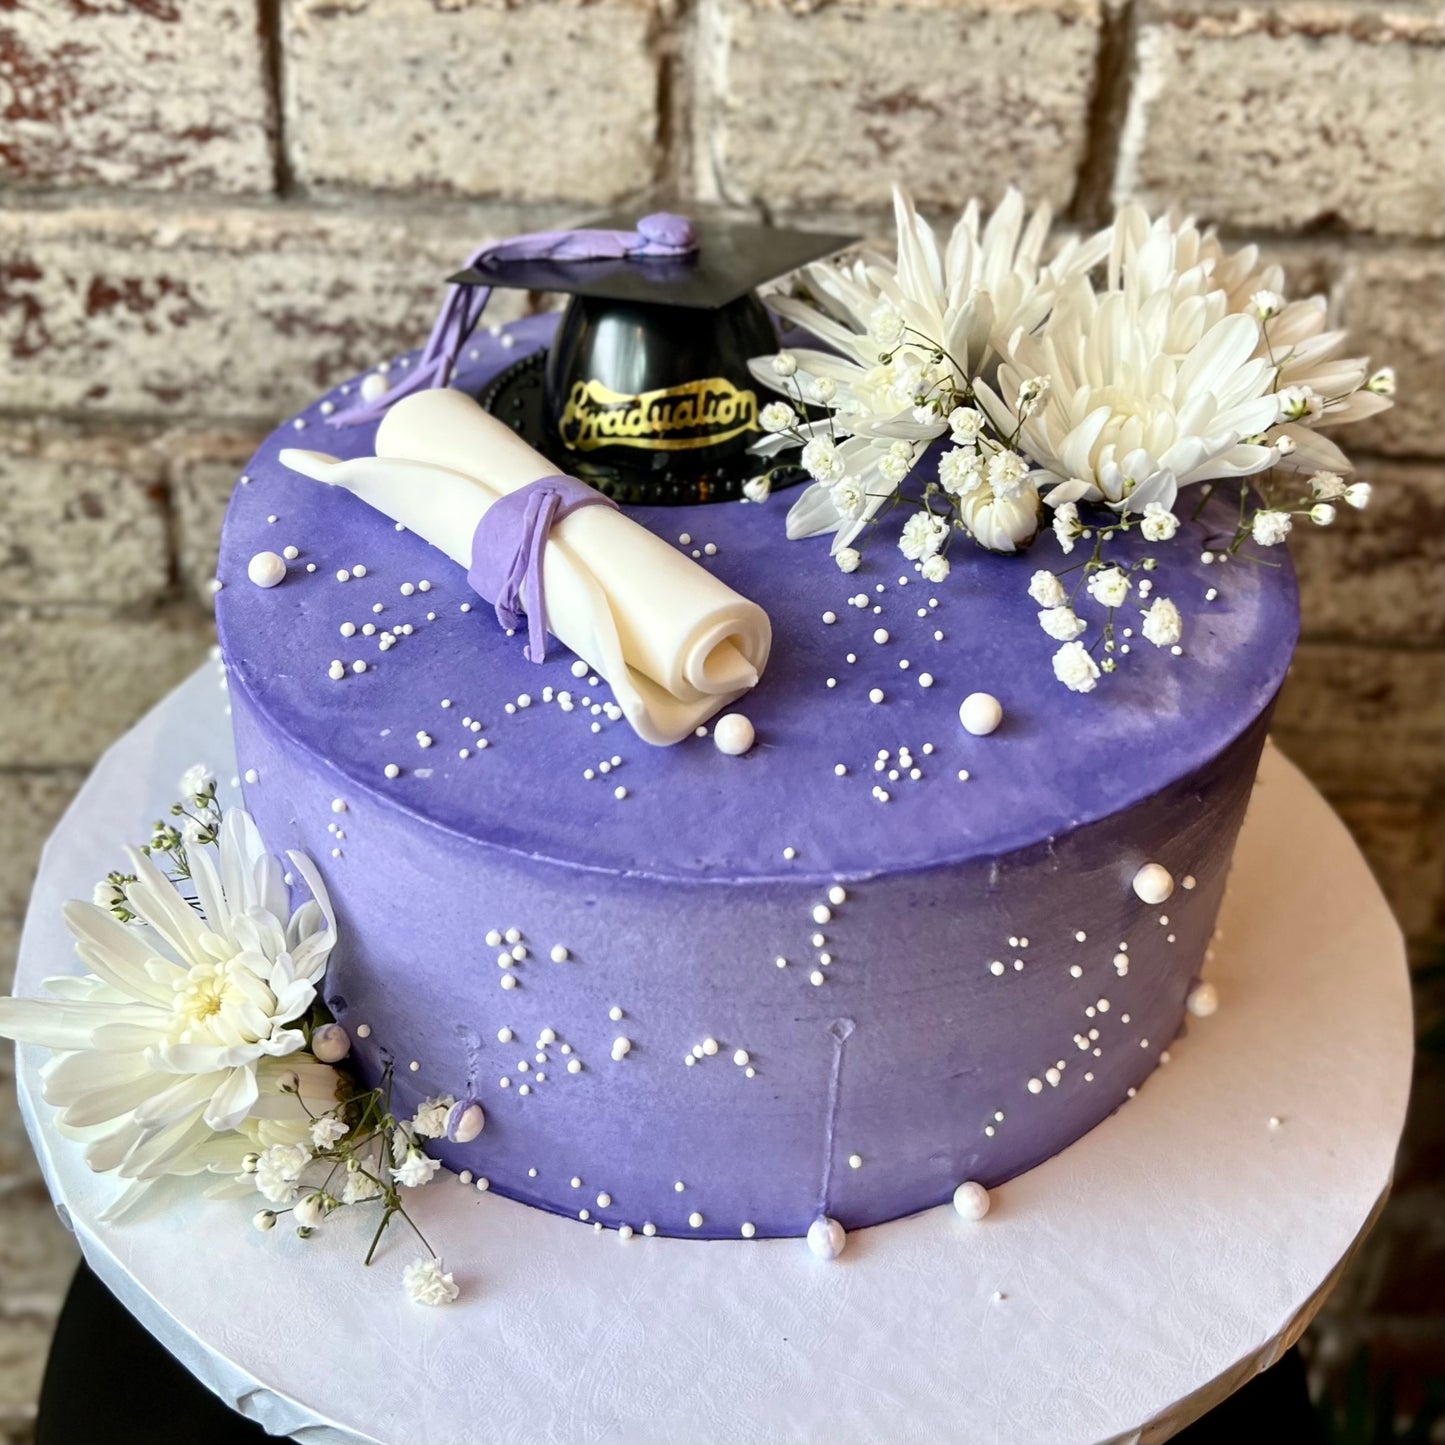 Purple graduation themed cake with fresh white flowers